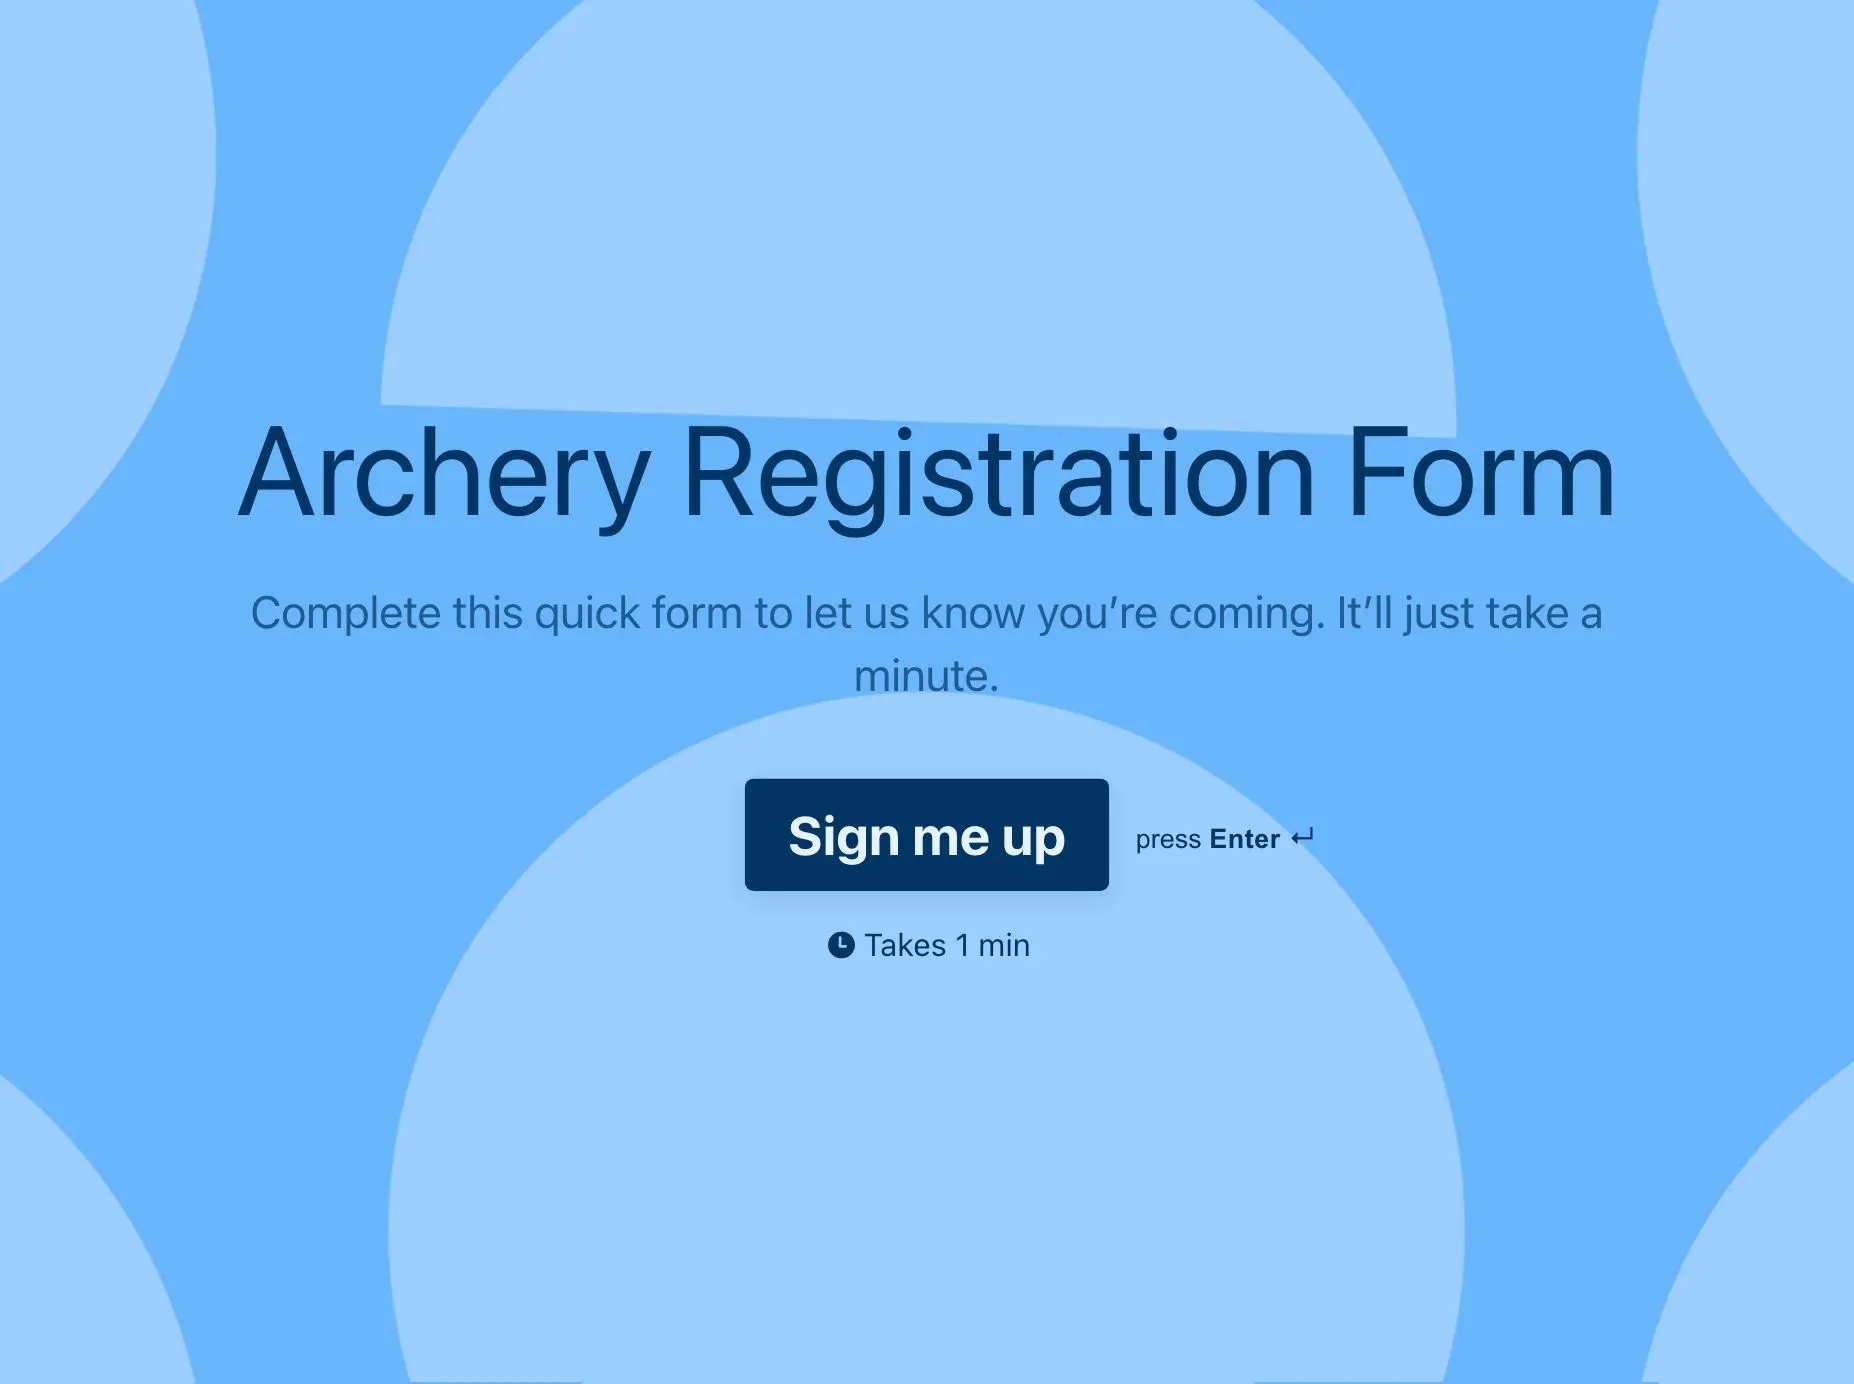 Archery Registration Form Template Hero